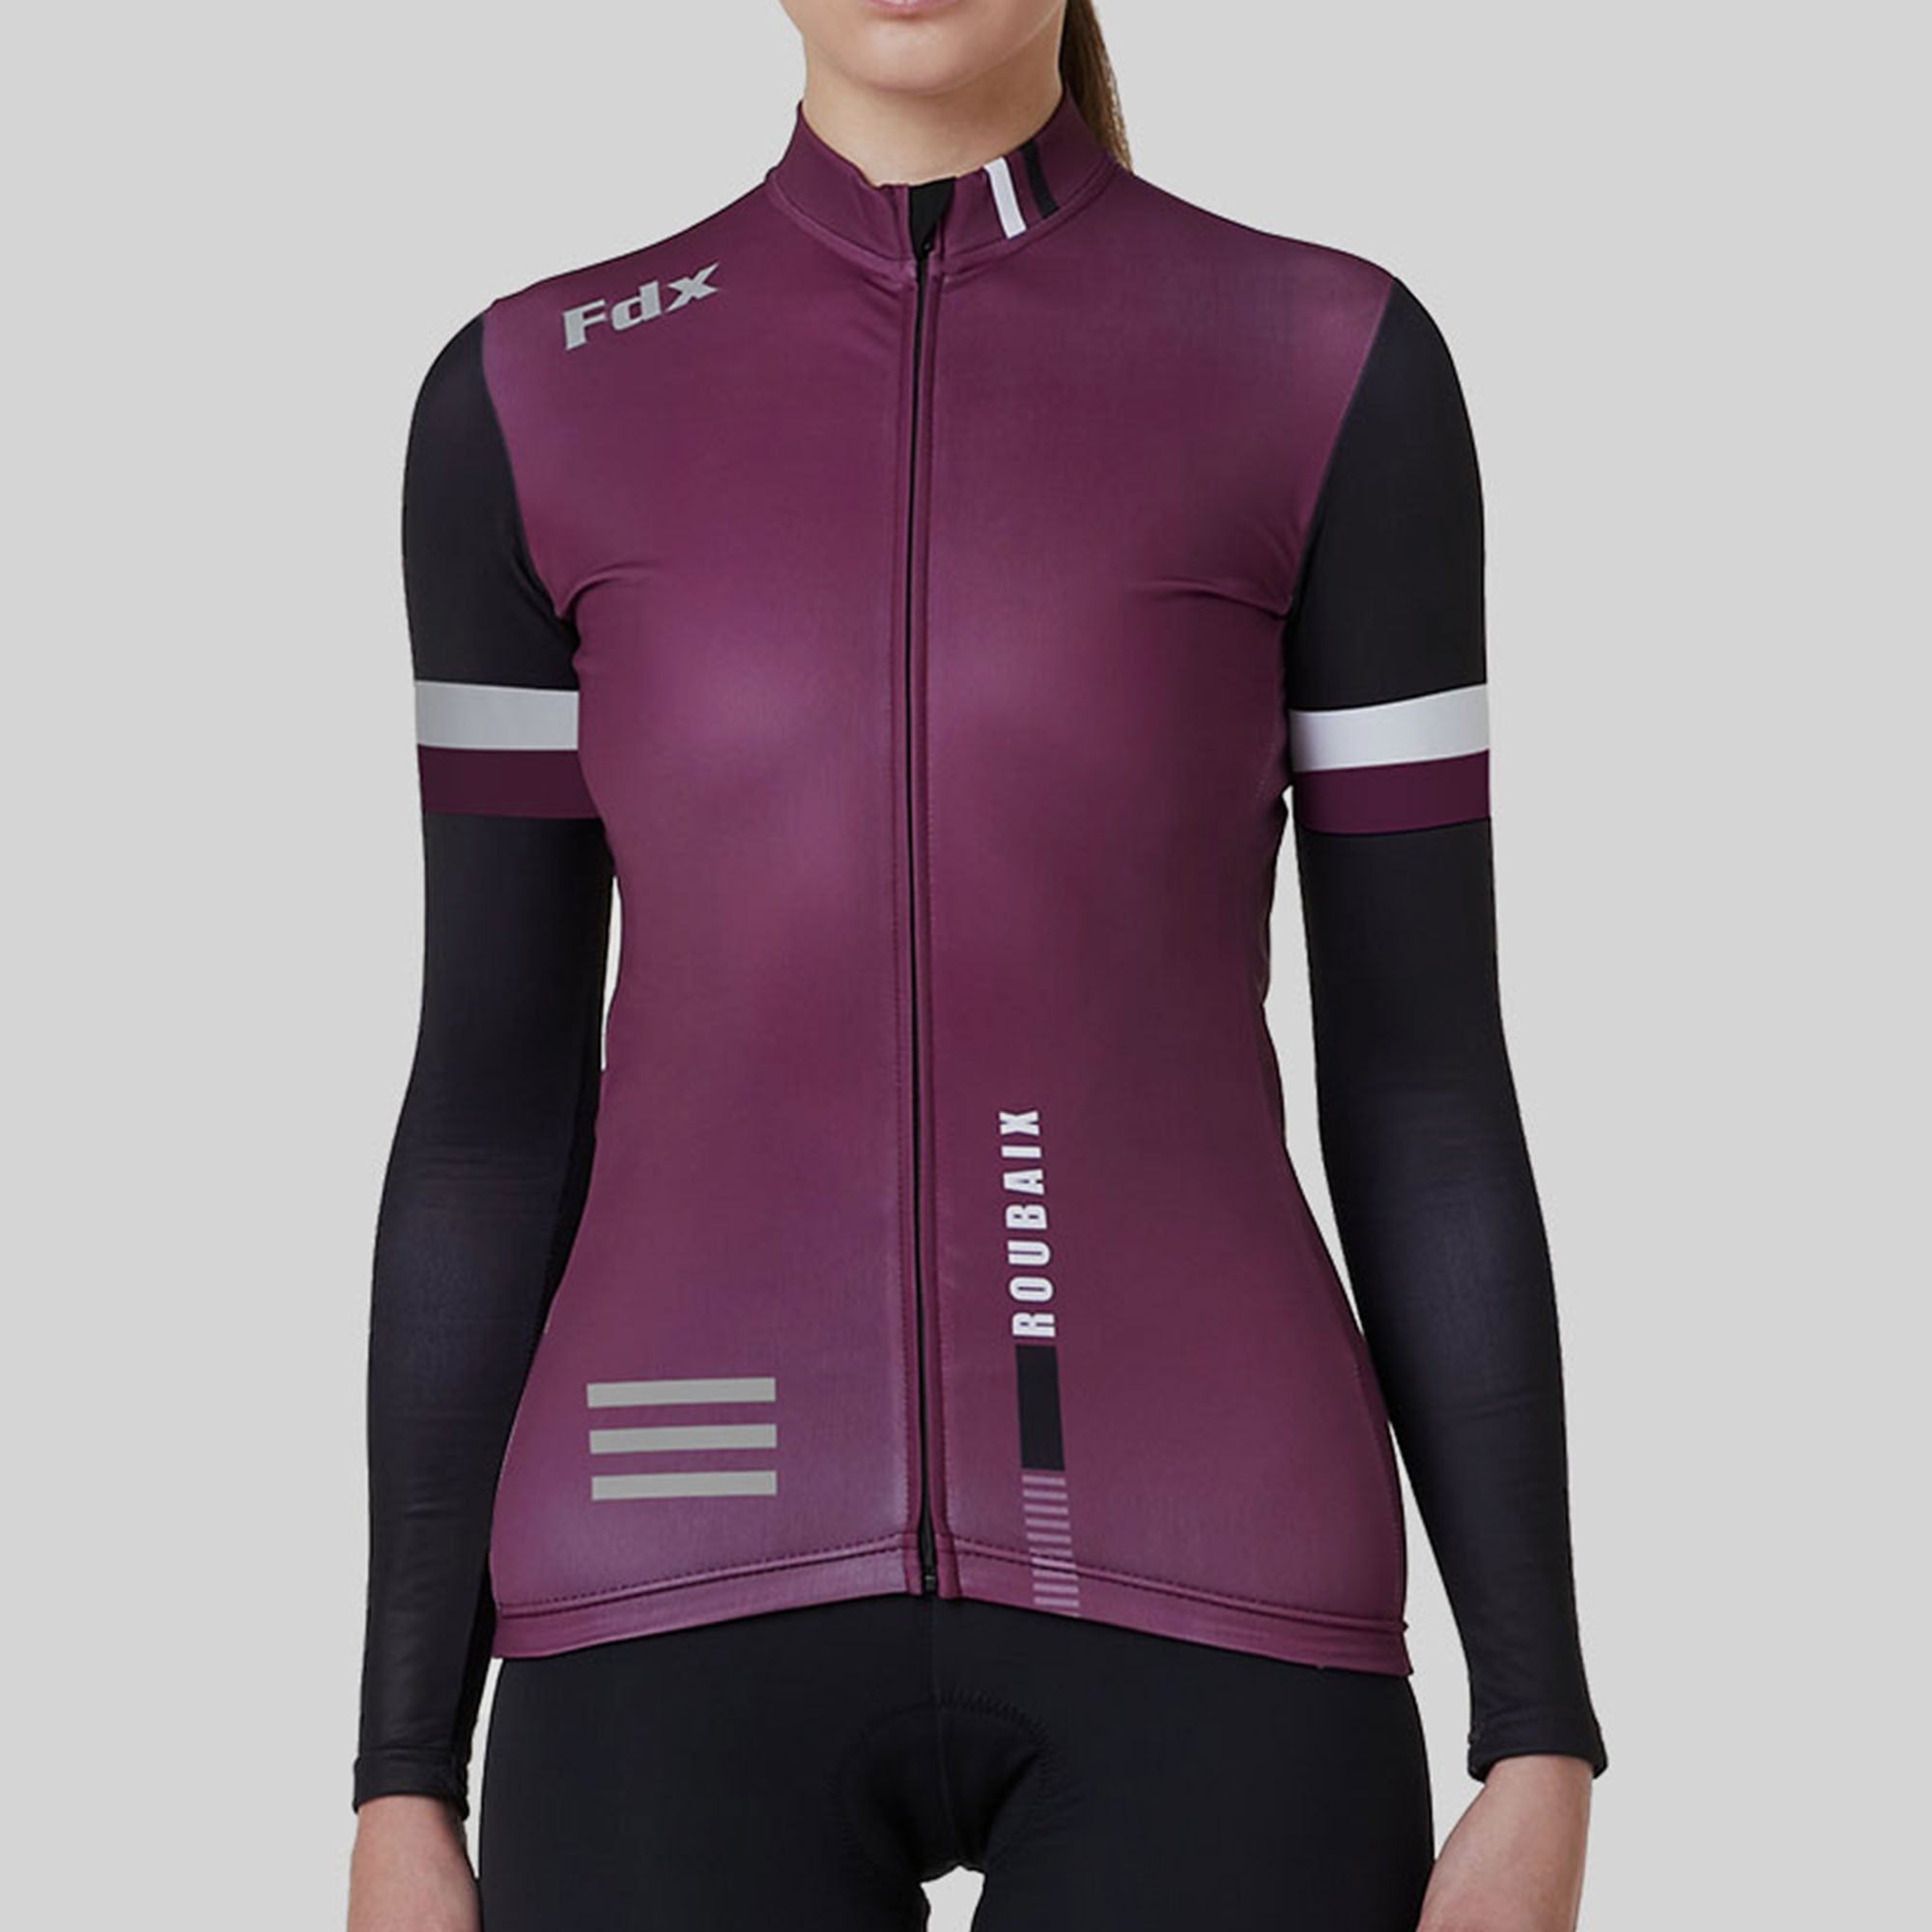 Fdx Best Women's Black & Purple Long Sleeve Cycling Jersey for Winter Roubaix Thermal Fleece Shirt Road Bike Wear Top Full Zipper,Lightweight  Pockets & Hi viz Reflectors - Limited Edition